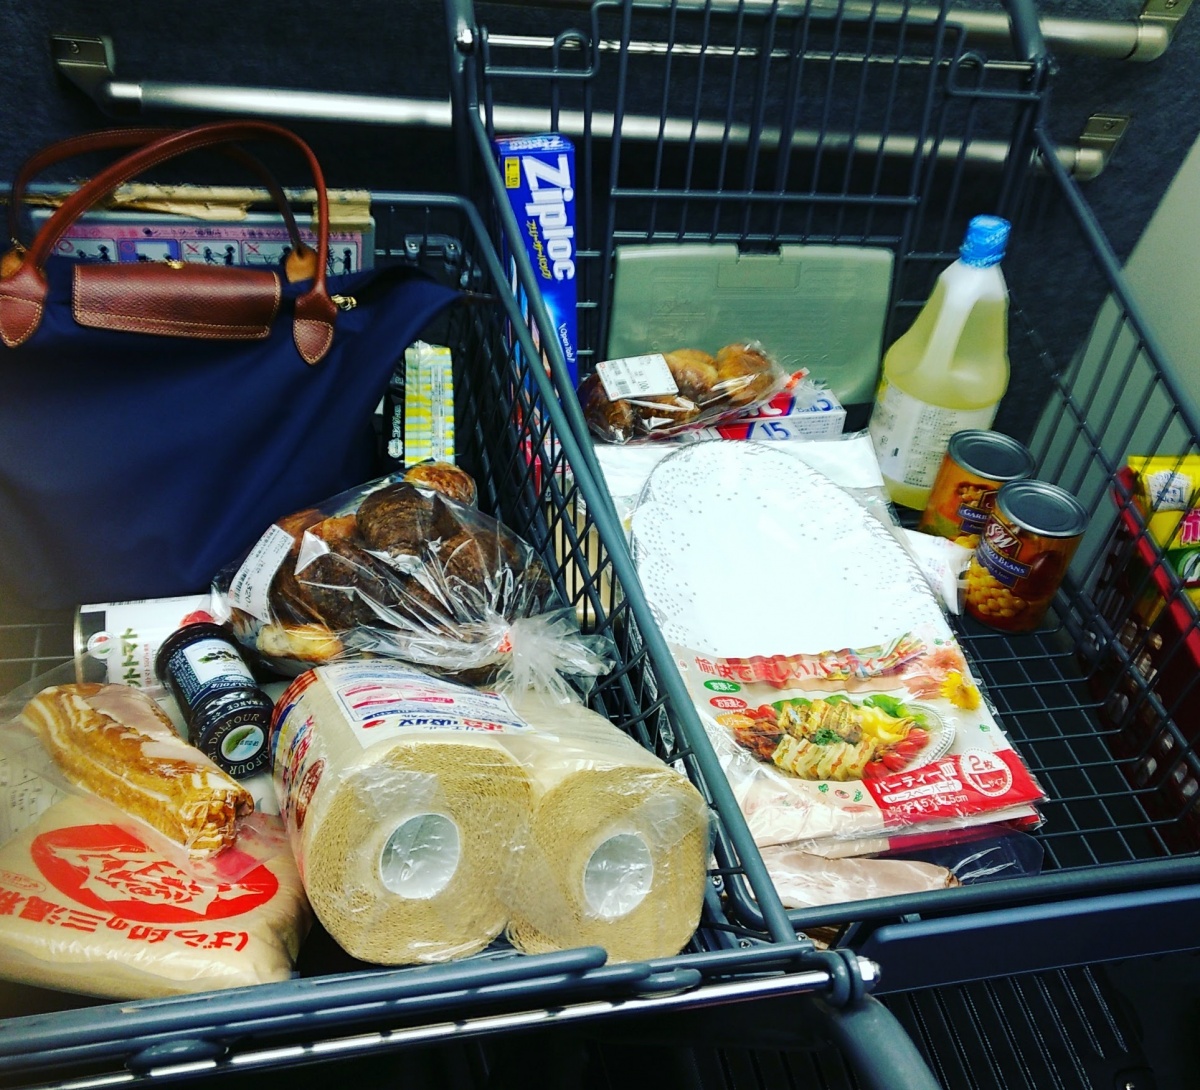 4. For Food, Home & Imported Goods: OK! Supermarket